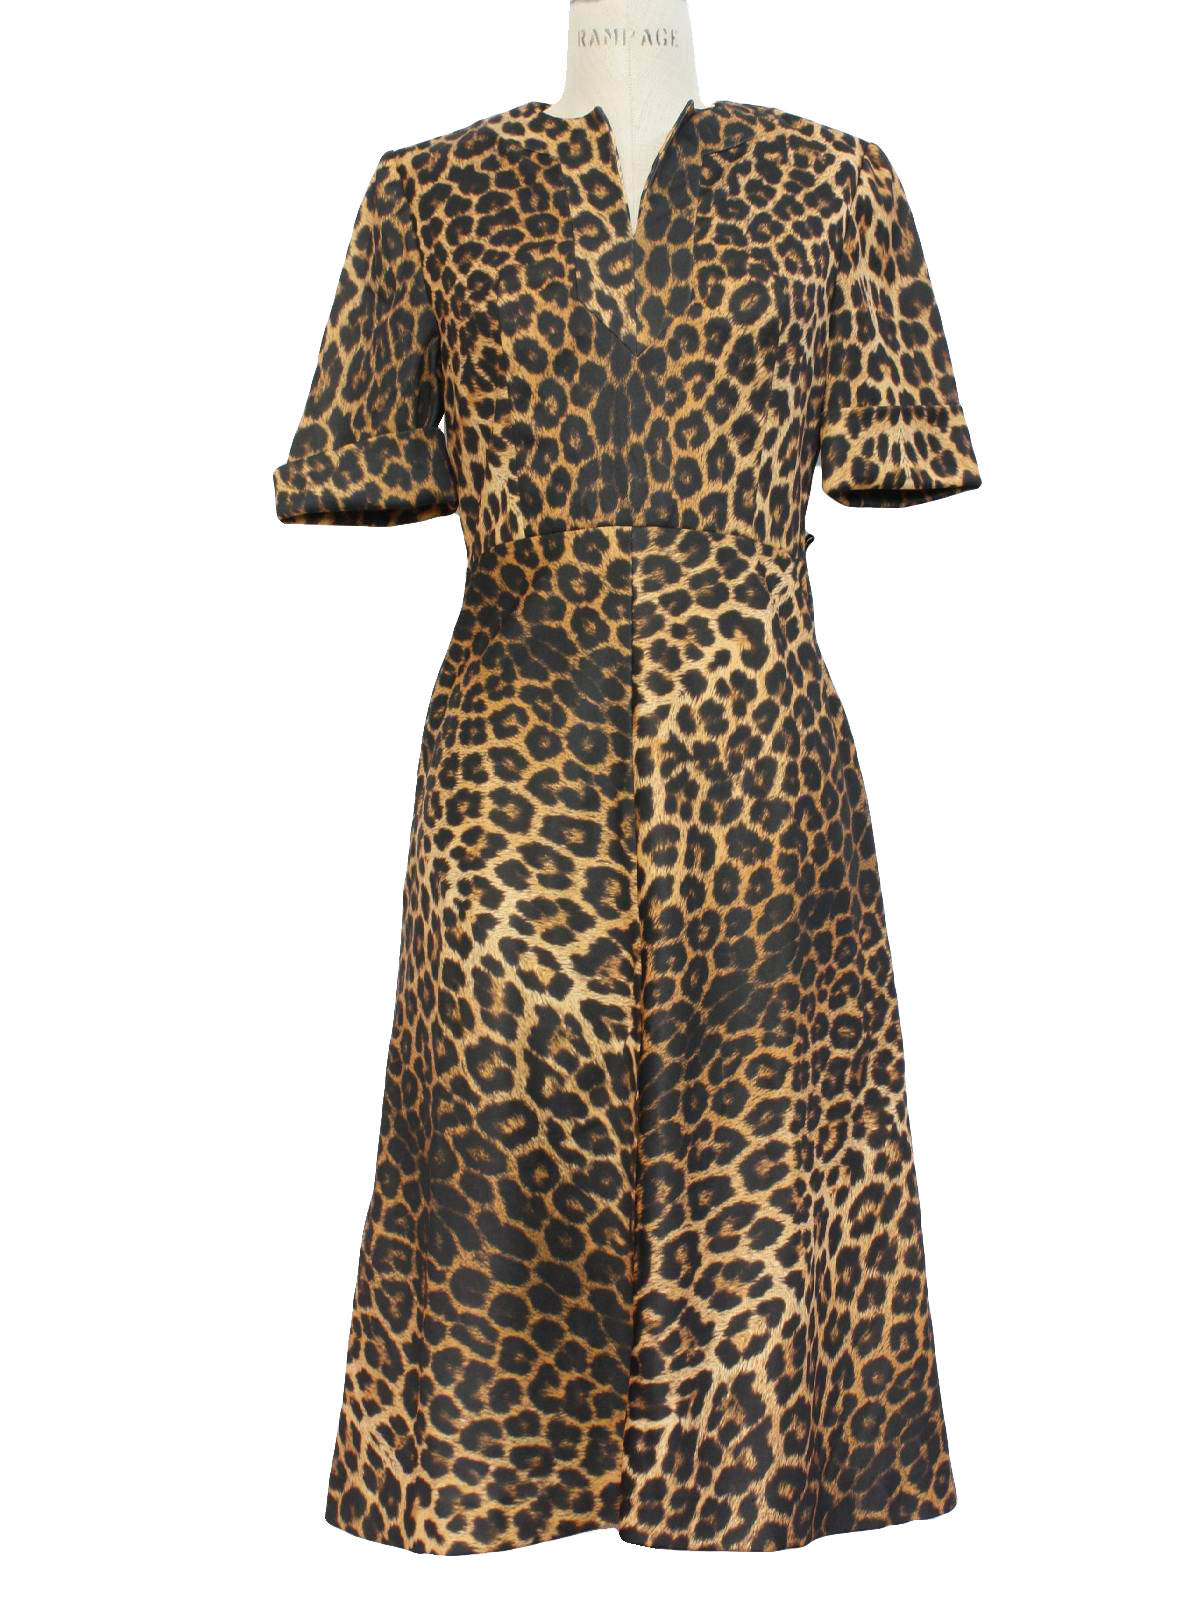 Trevira 1970s Vintage Dress: 70s -Trevira- Womens black and tan leopard ...